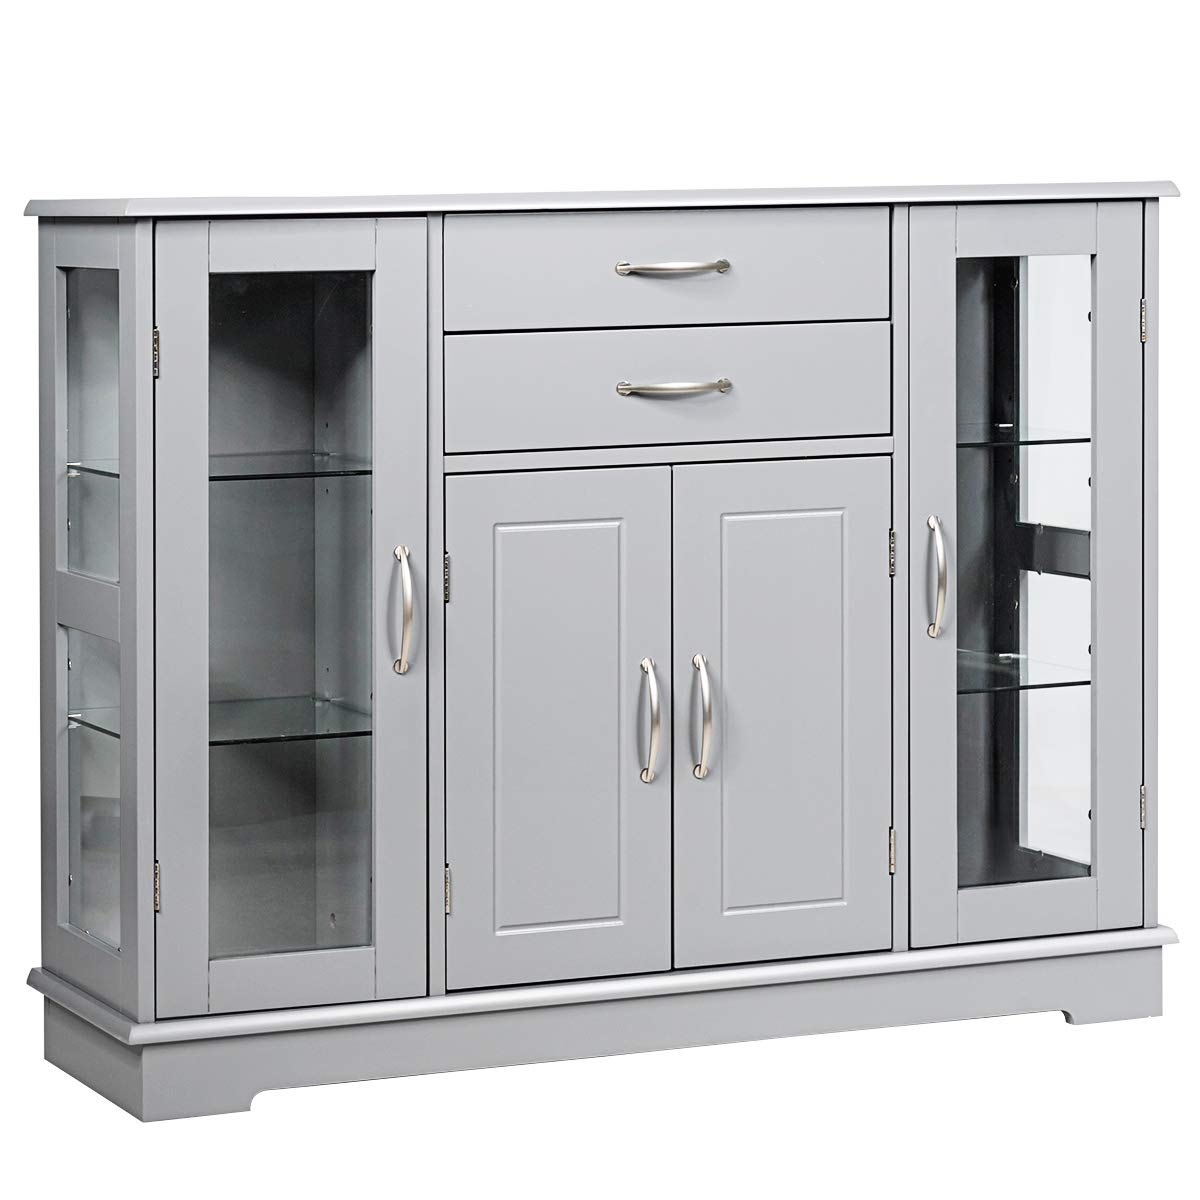 Giantex Sideboard Buffet Server Storage Cabinet W/ 2 Drawers